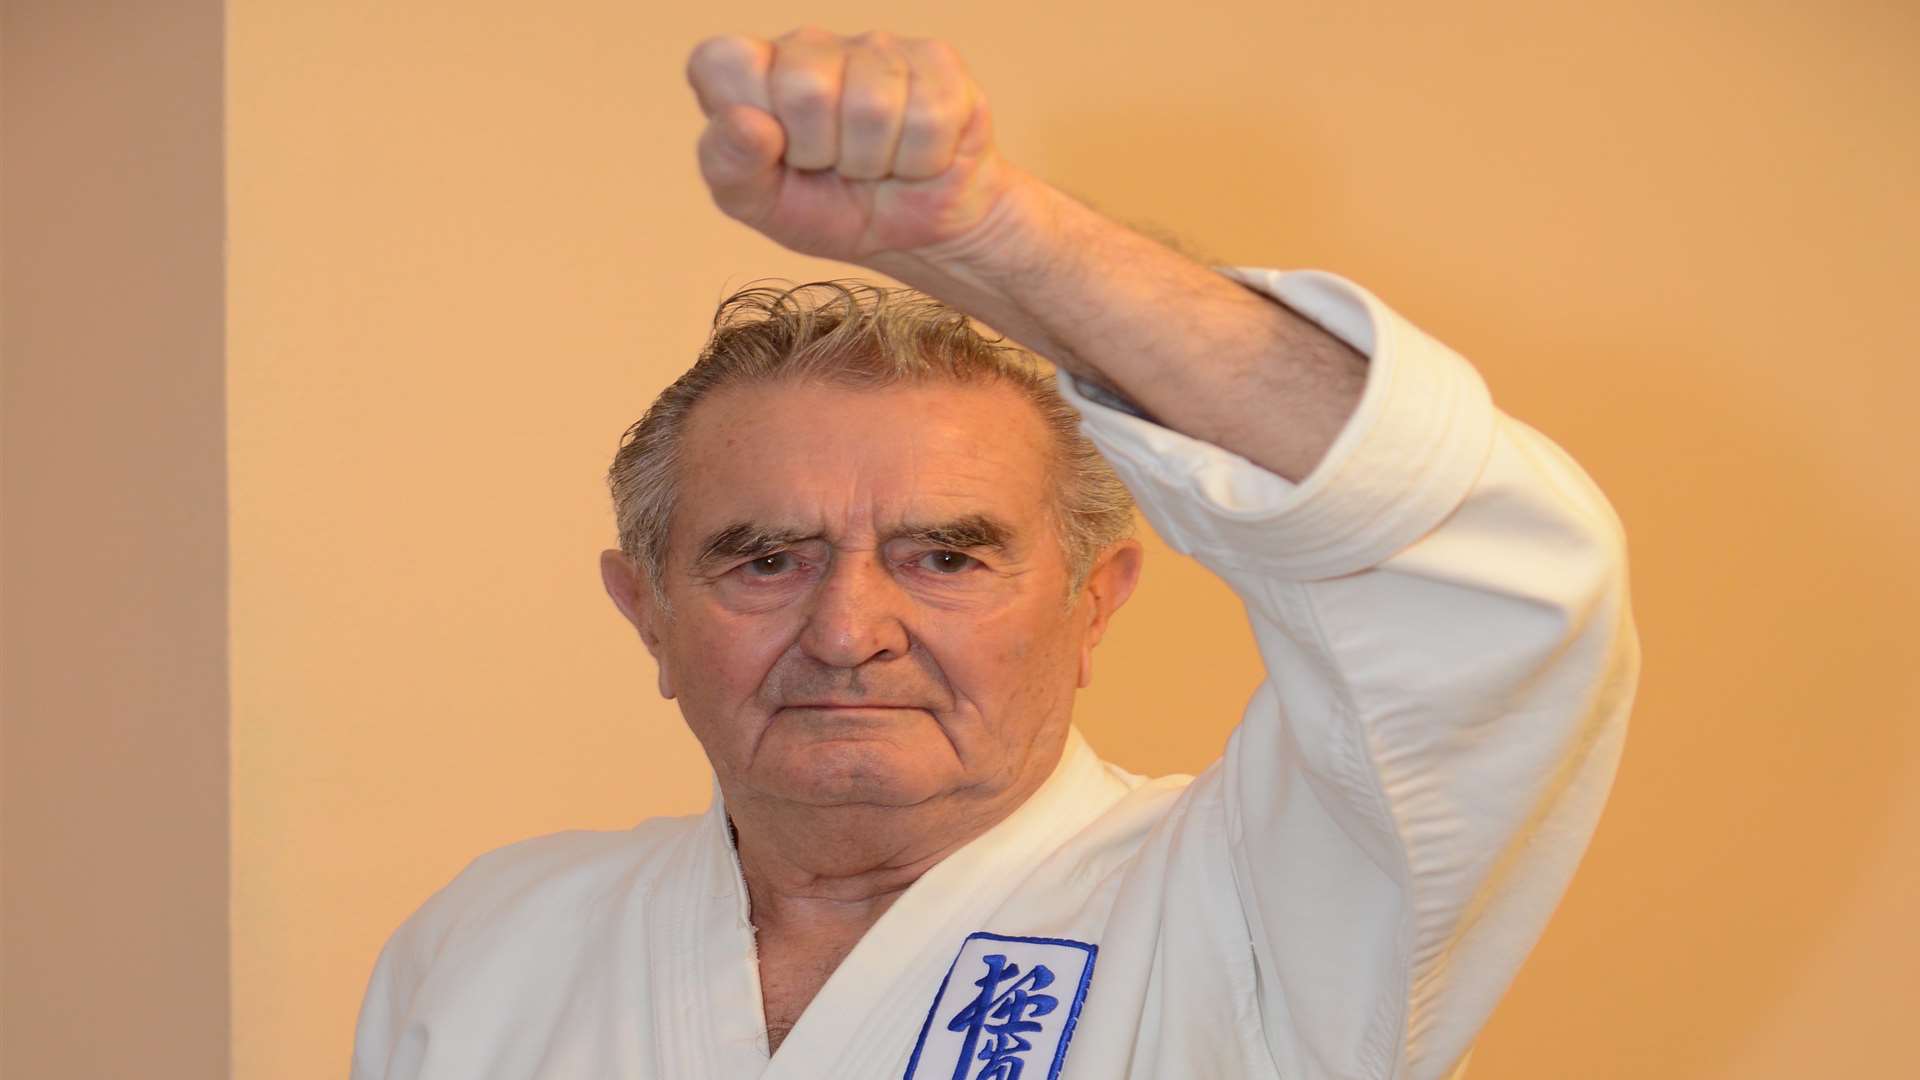 Keith Bennett, 84, has just gained his black belt 5th dan in karate